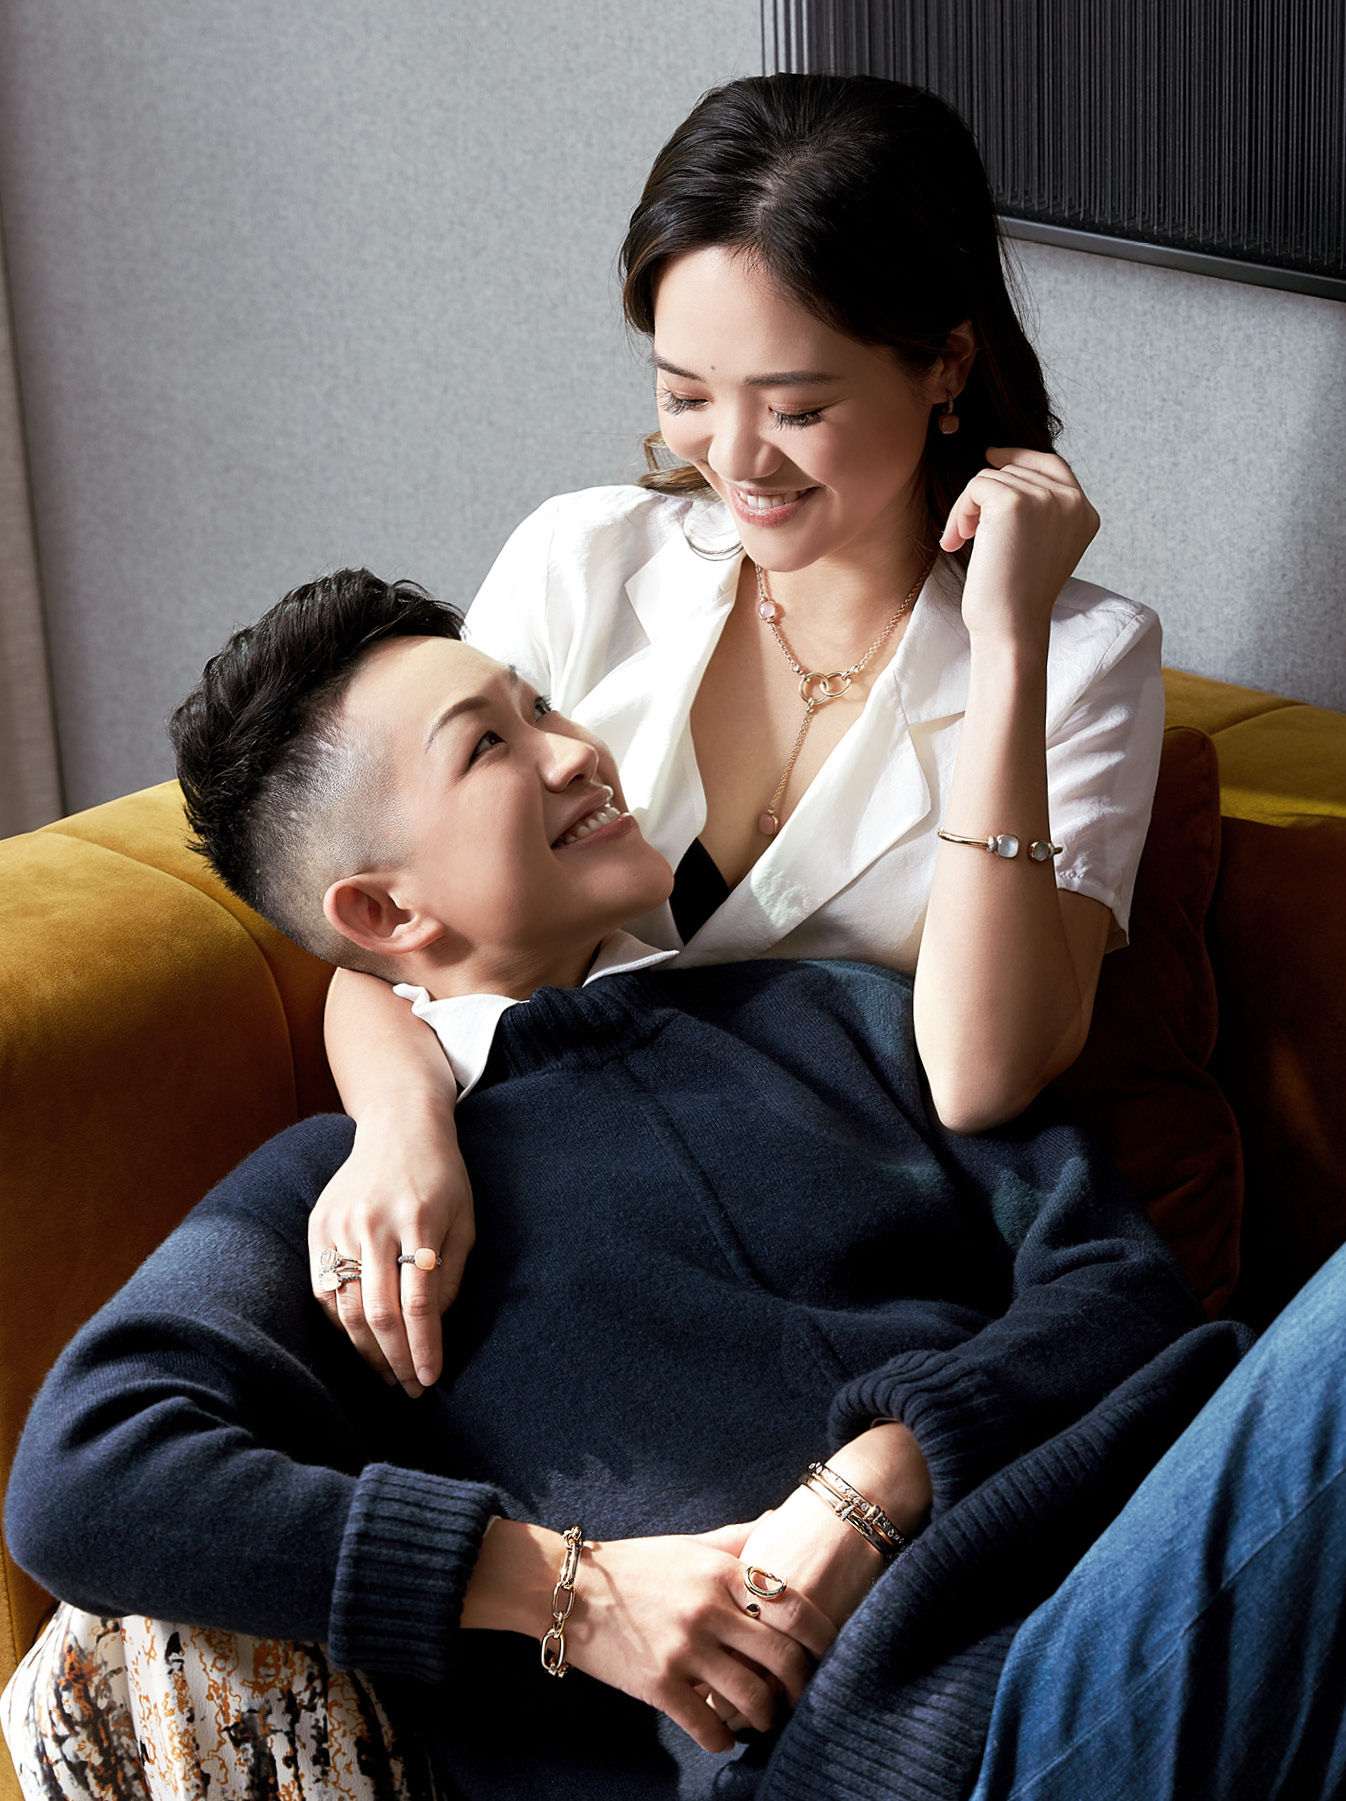 4 Hong Kong Couples on Relationships & Romance